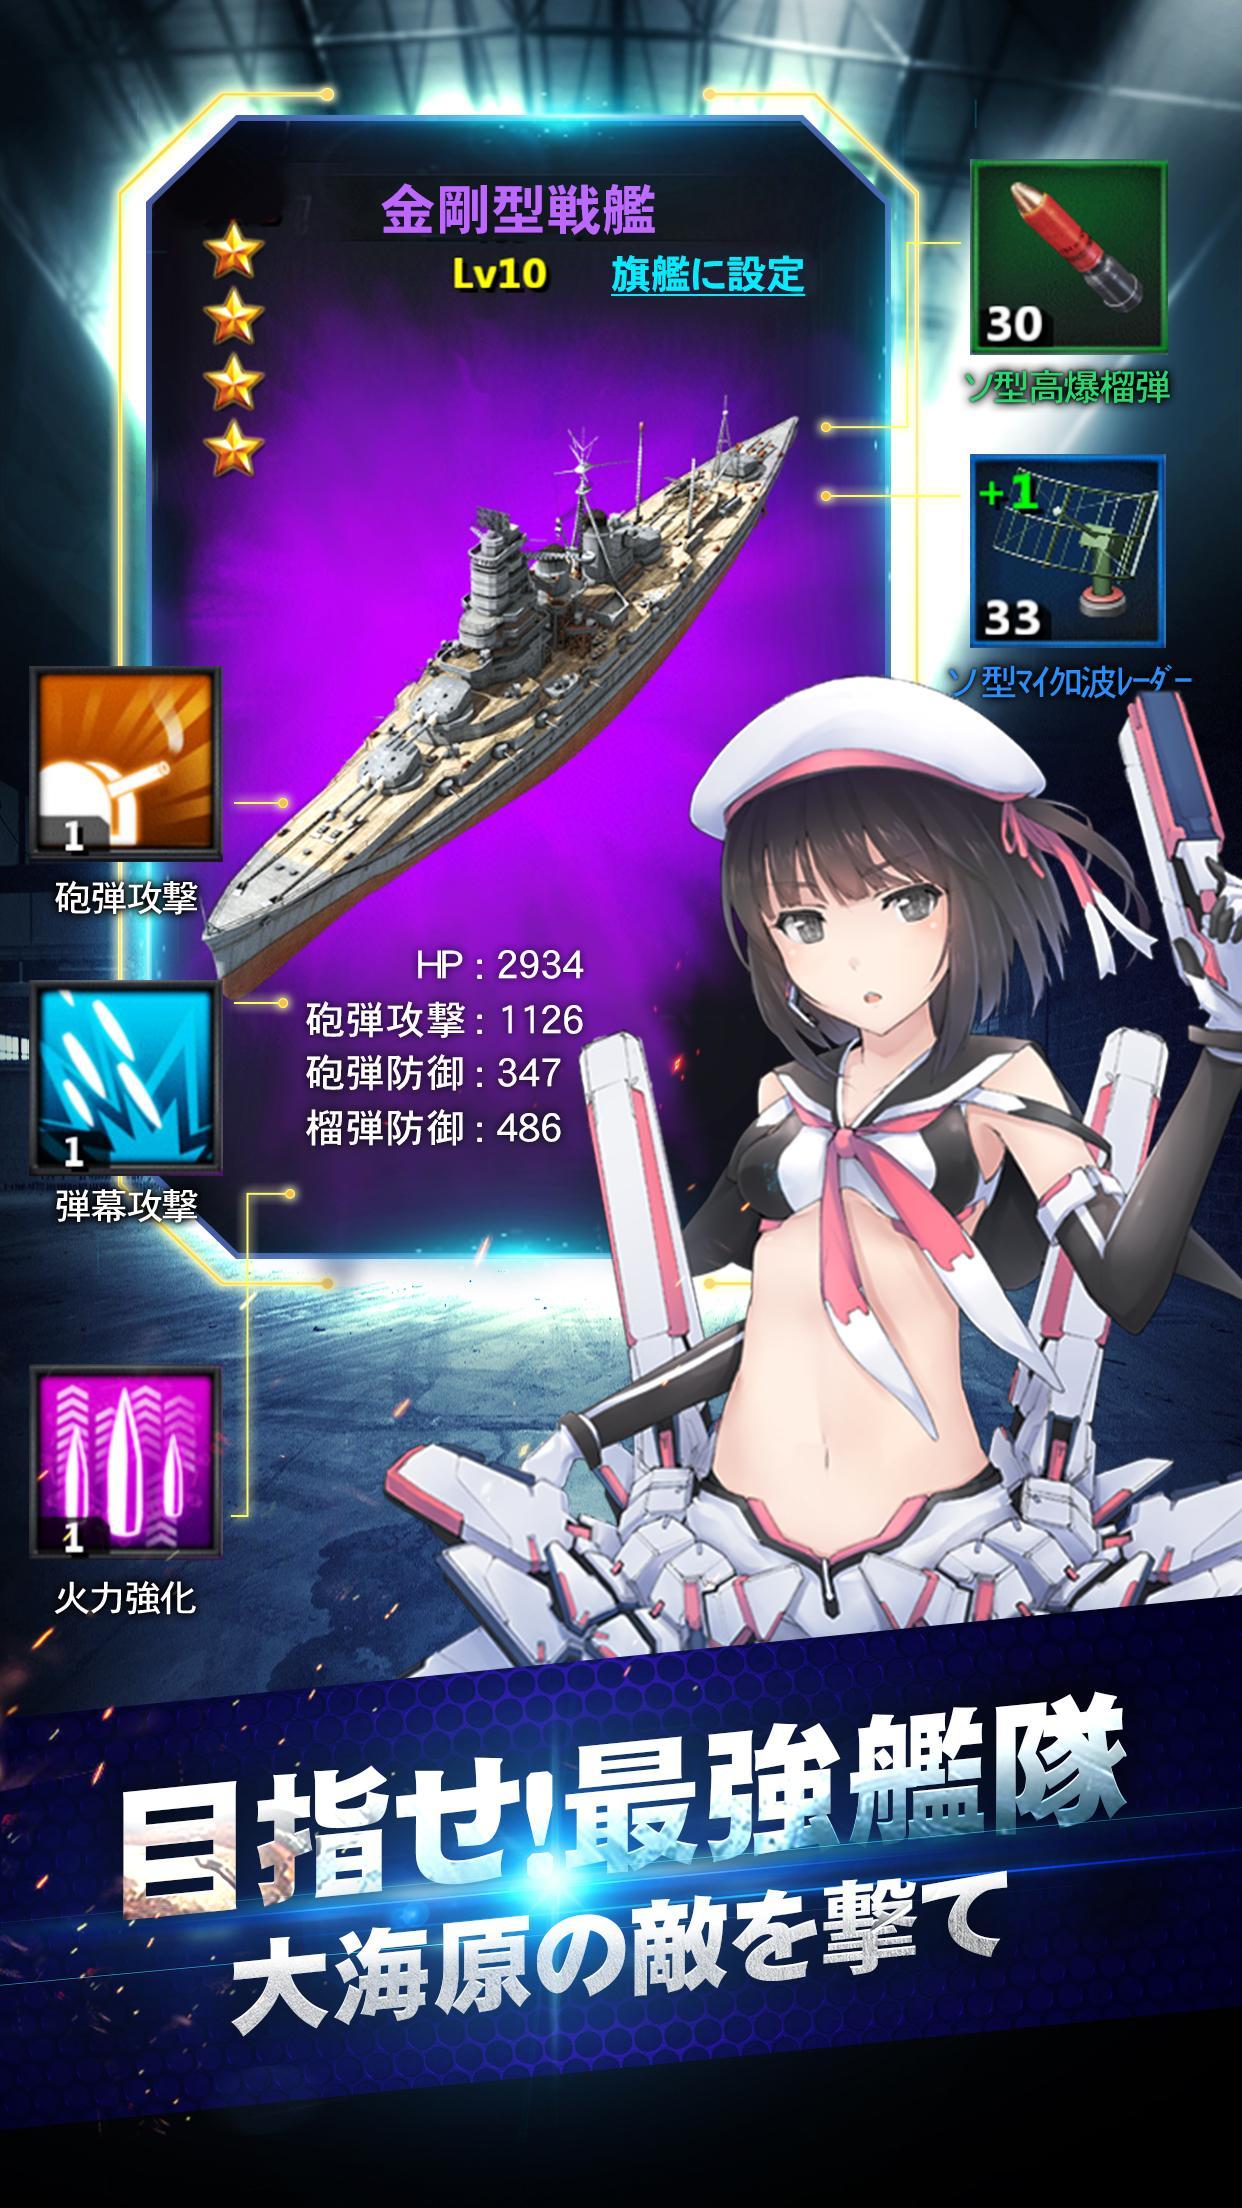 Screenshot 1 of Ocean Craft (vertical na bersyon ng battleship game) 1.2